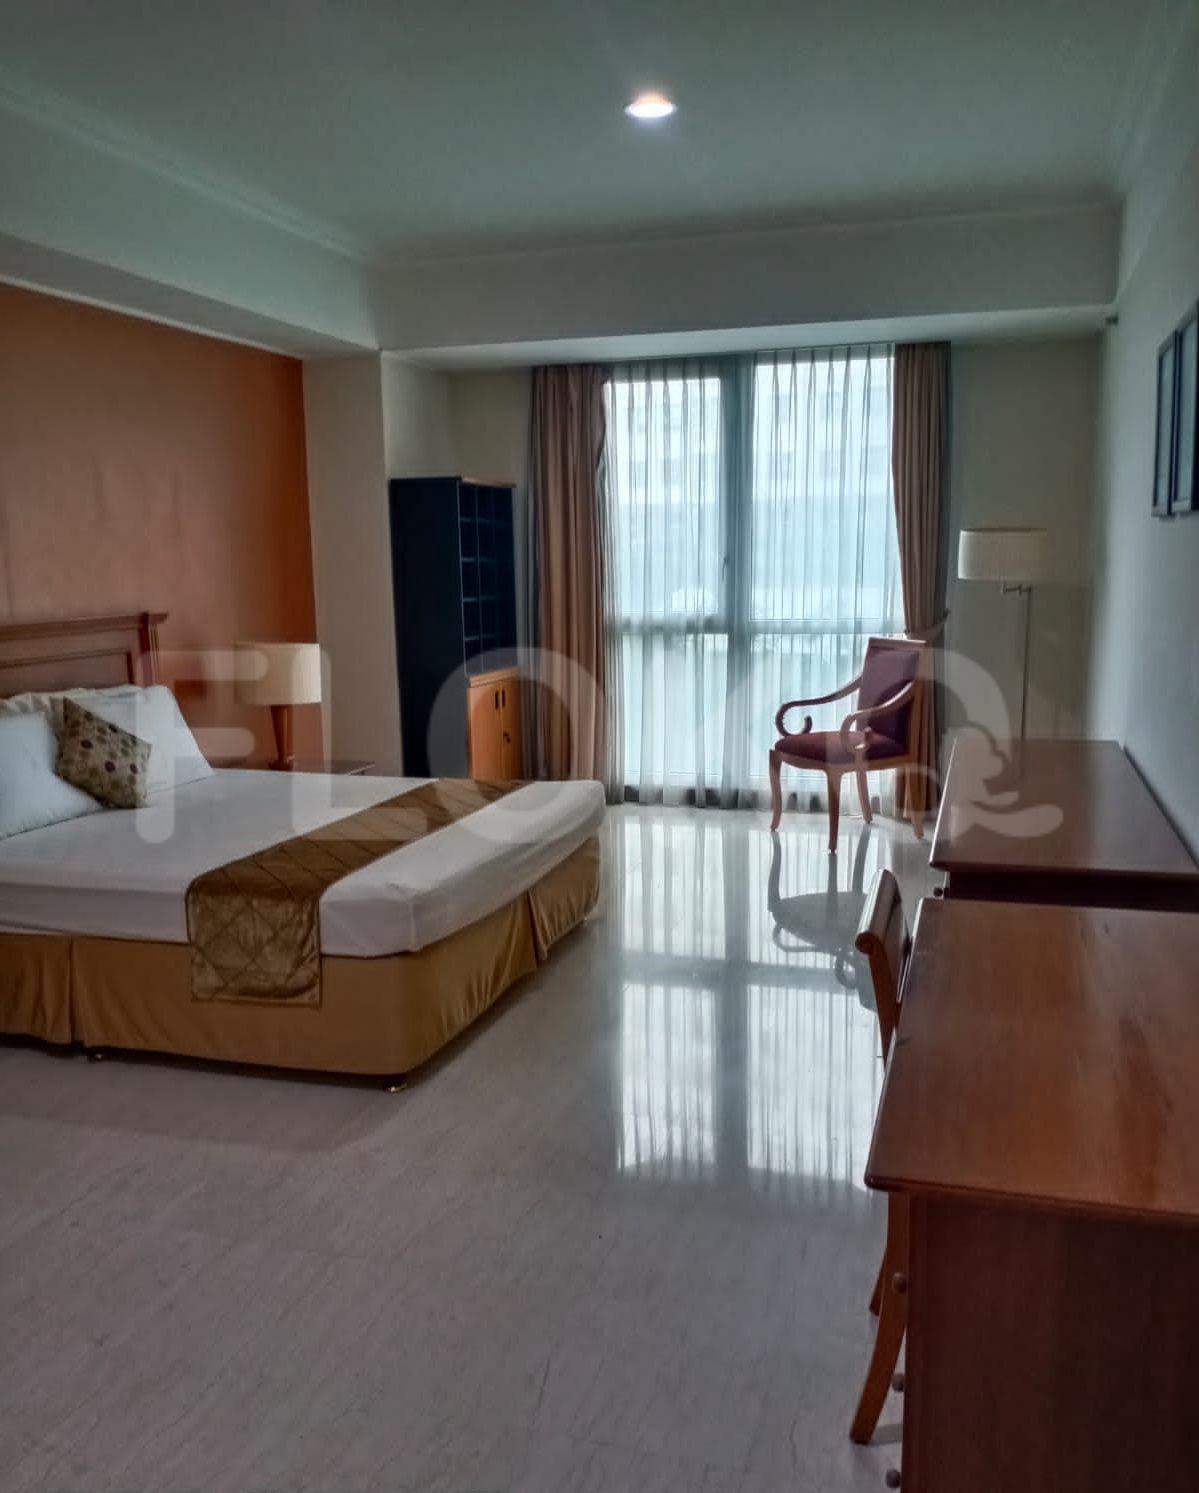 3 Bedroom on 2nd Floor fte11b for Rent in Casablanca Apartment